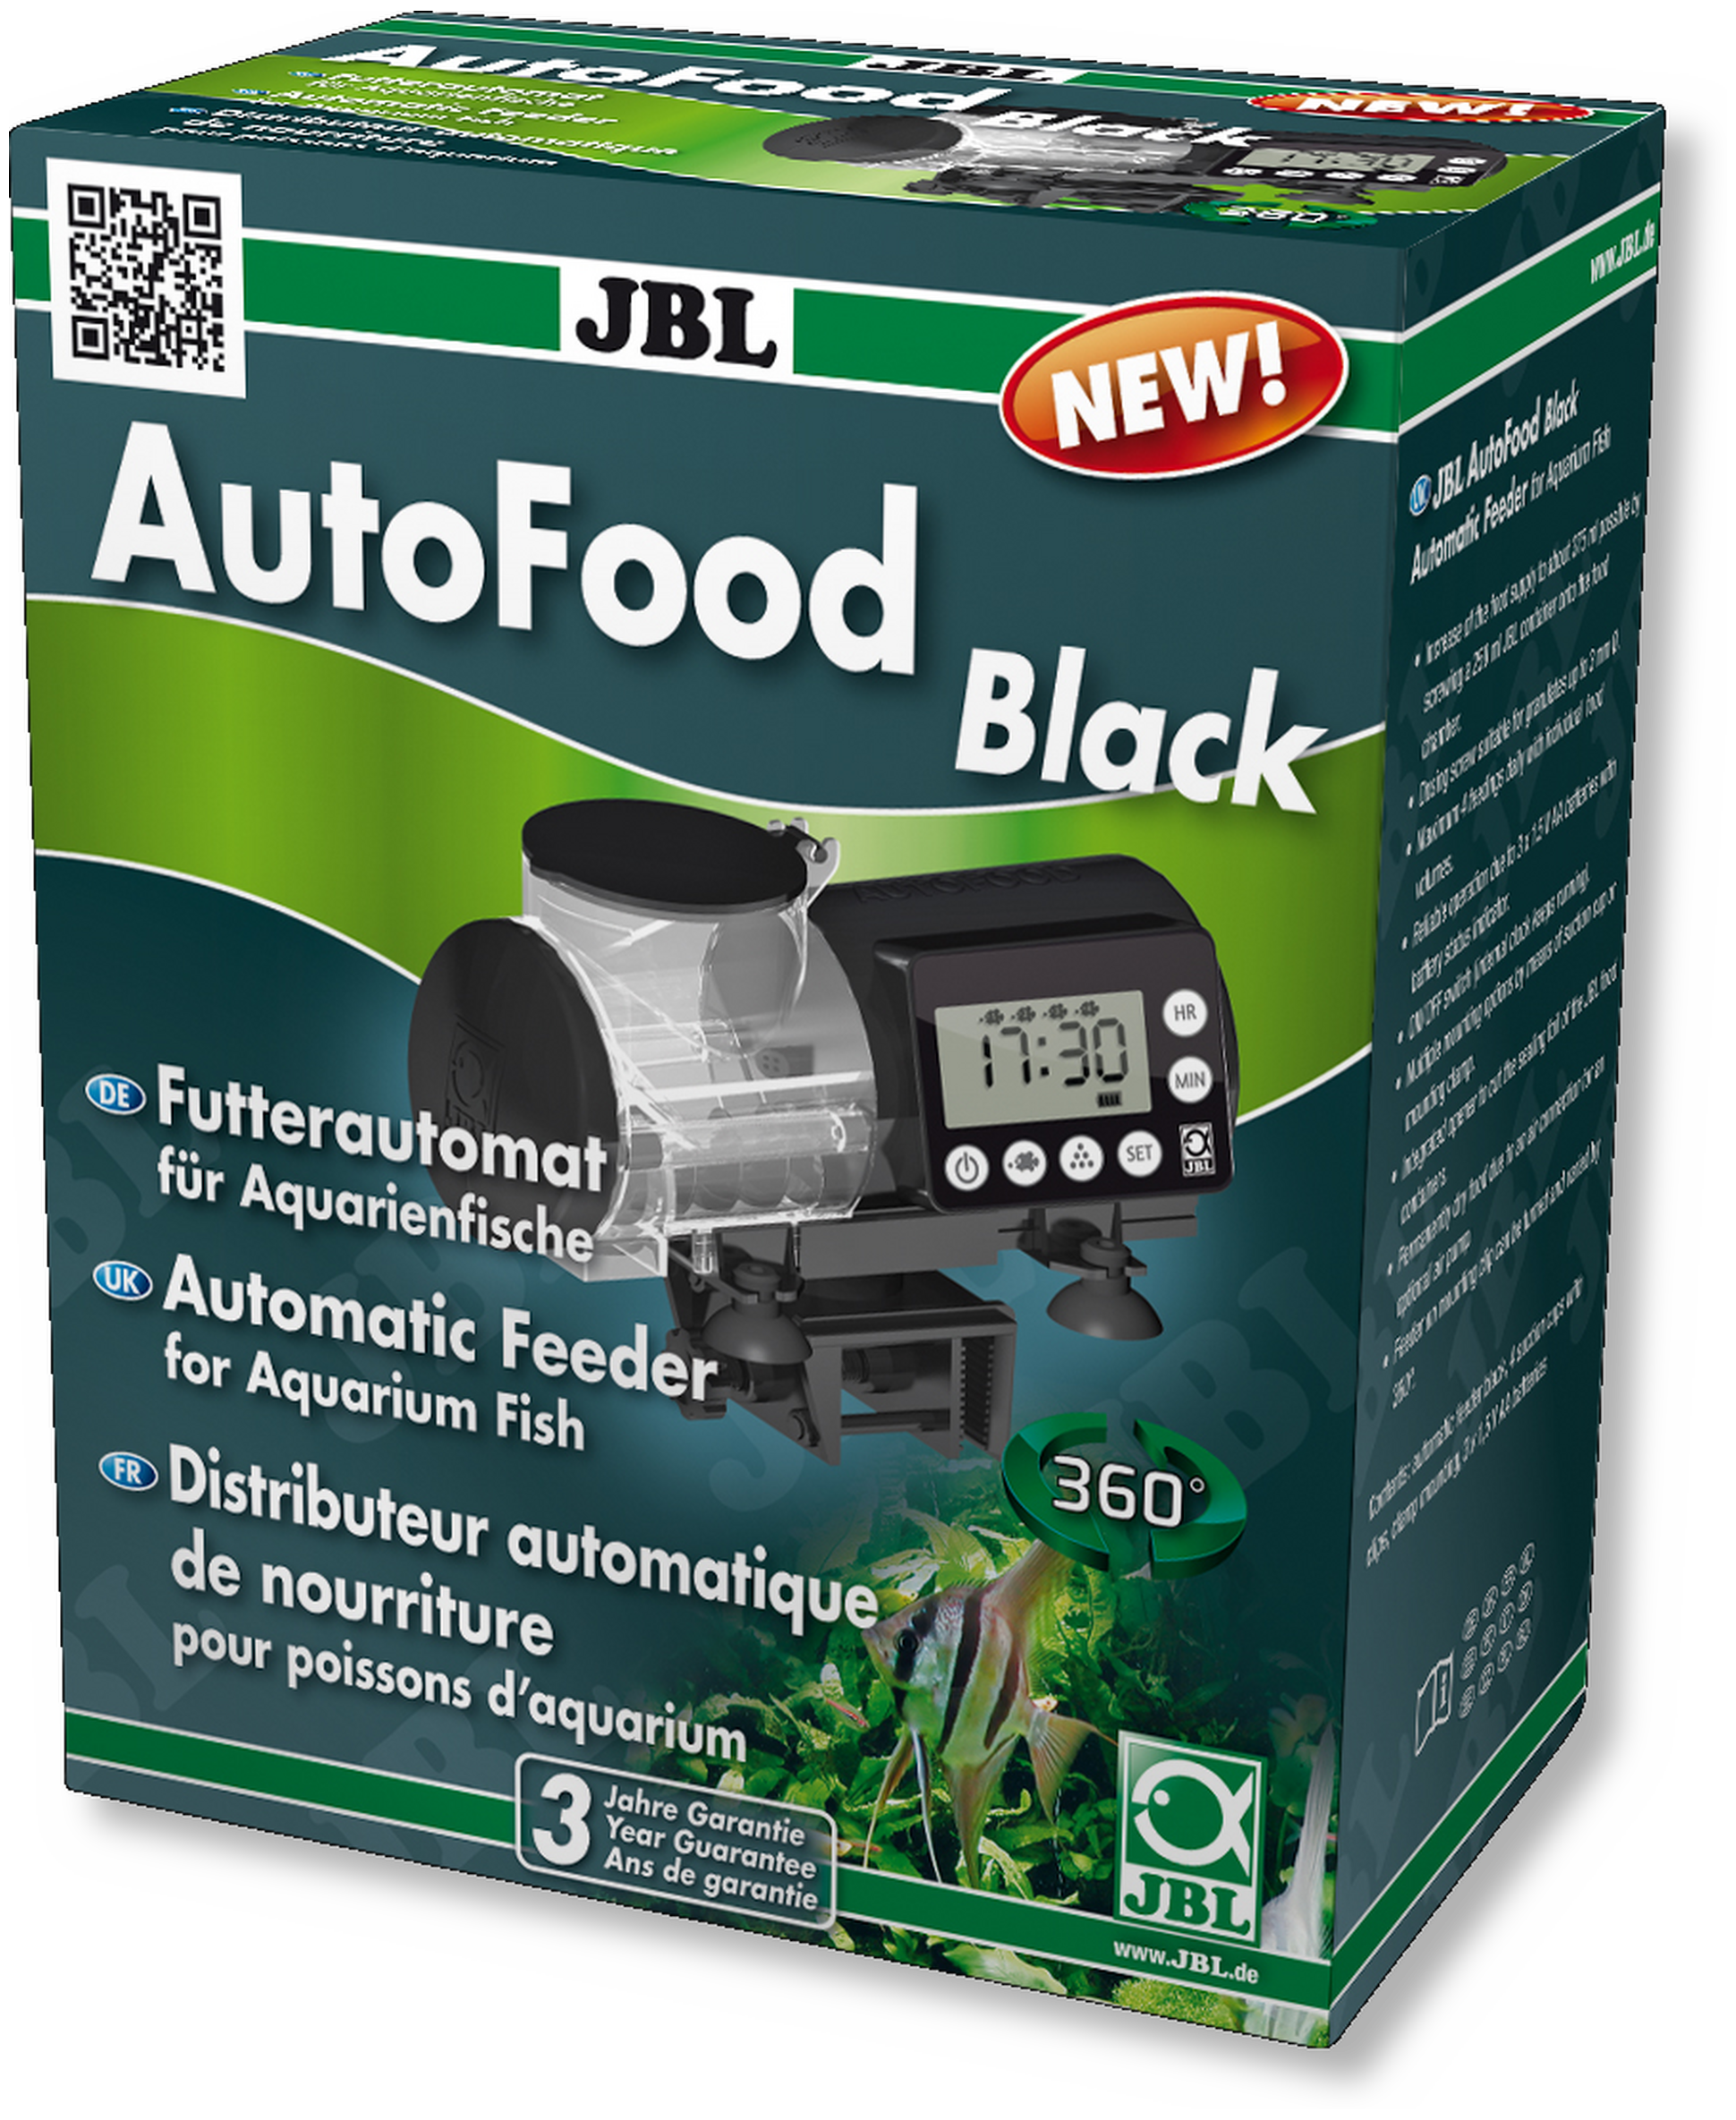 JBL AutoFood BLACK Black automatic feeder for aquarium fish